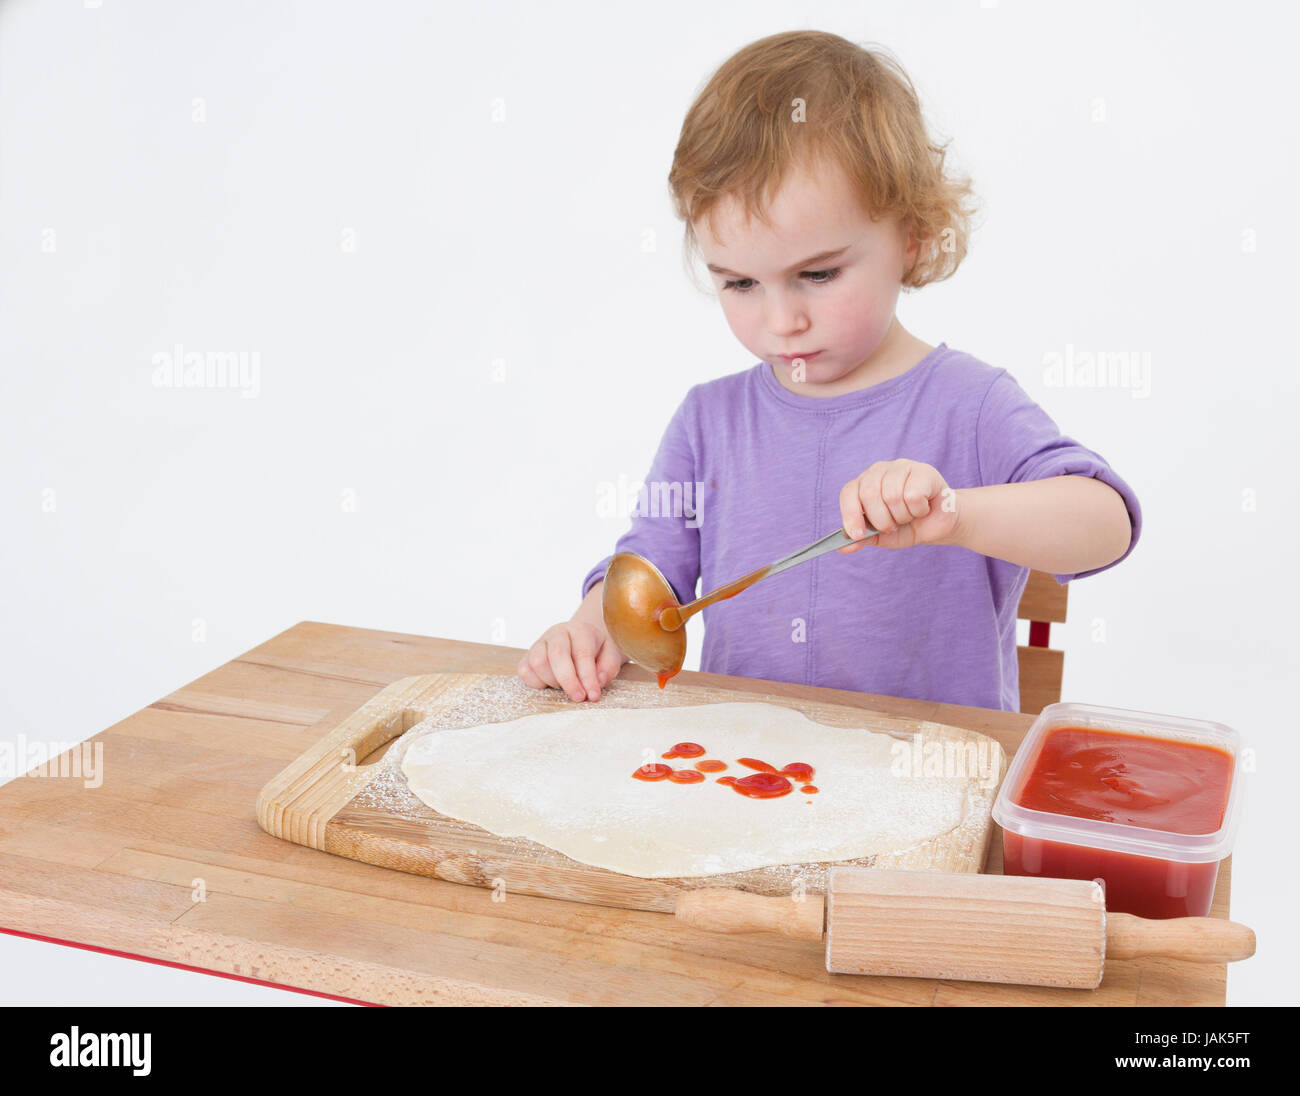 little girl making pizza. studio shot on light grey background Stock Photo